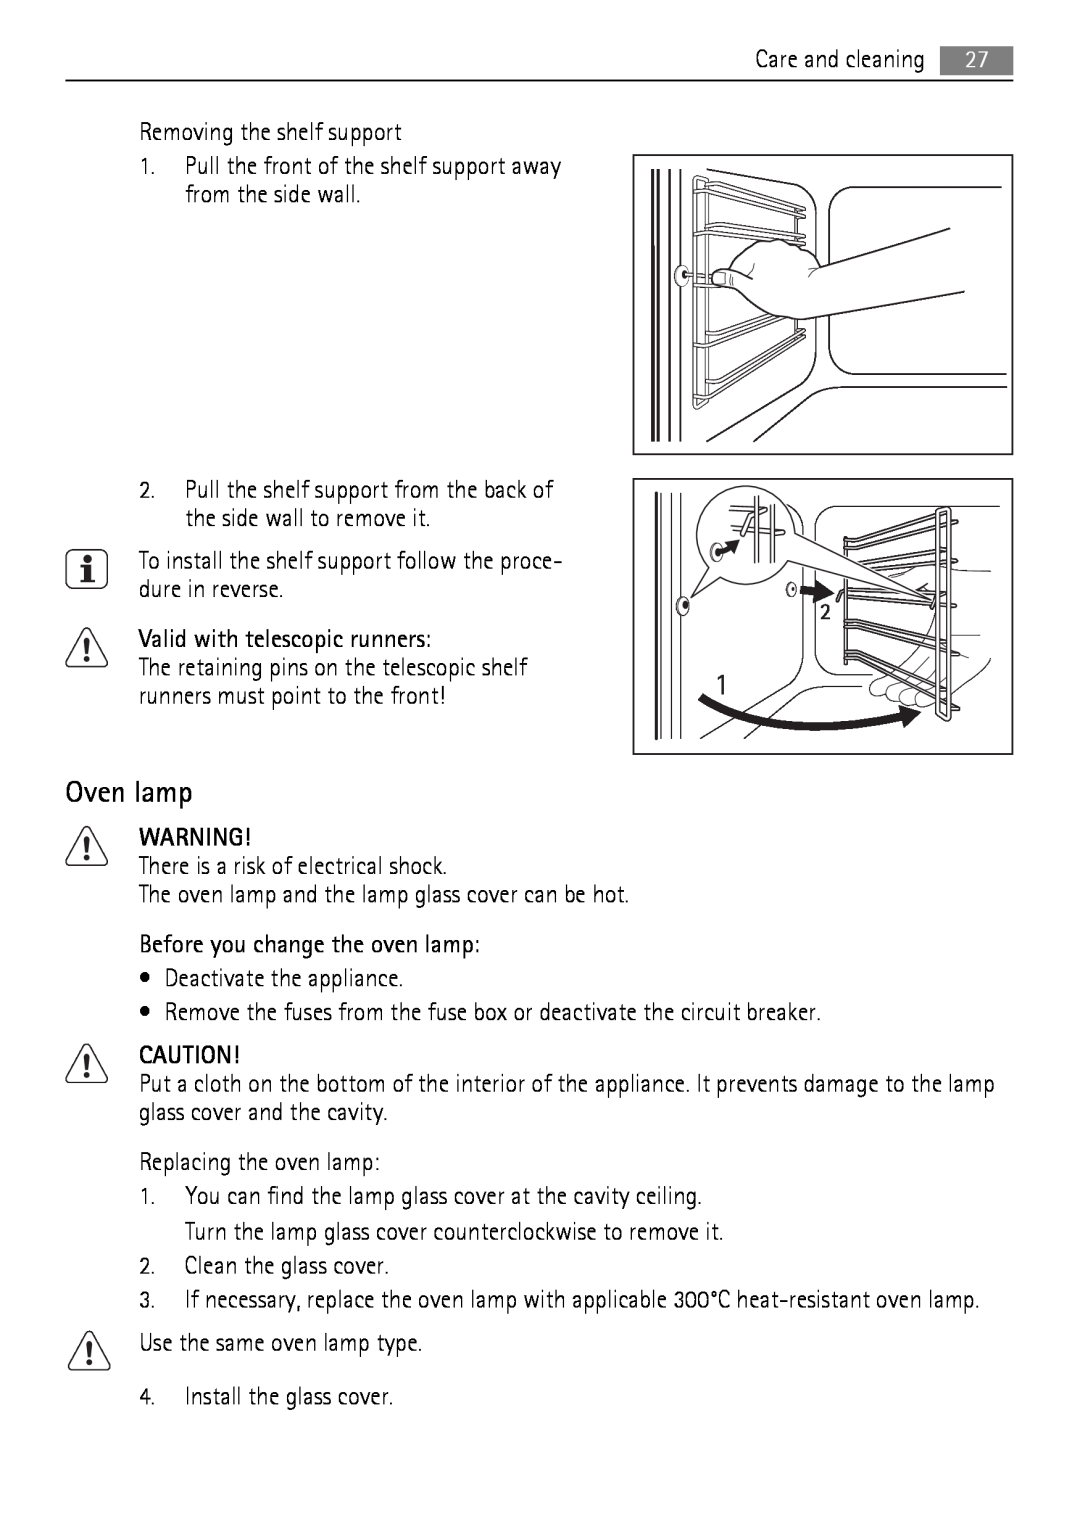 AEG BP5003001 user manual Oven lamp, Removing the shelf support 